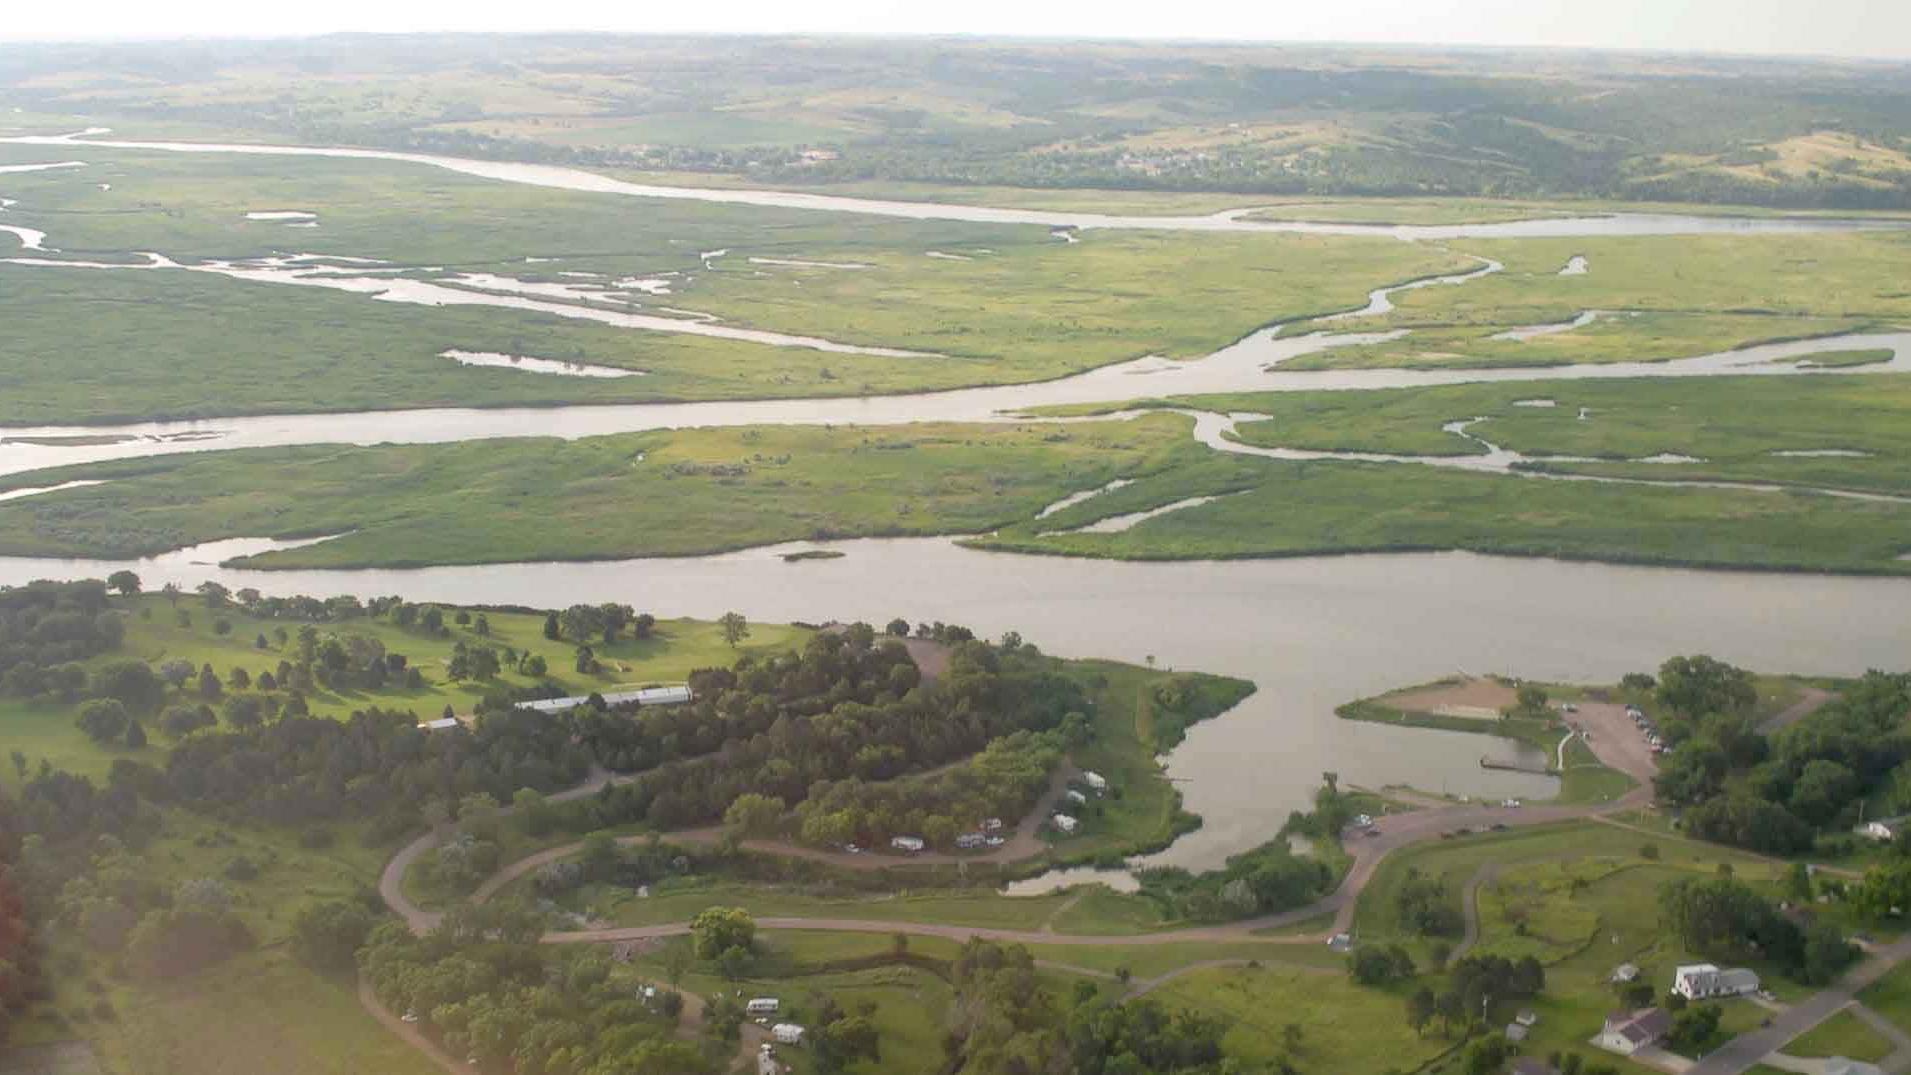 Rural water system in northeast Nebraska looks for alternatives amid contaminant concerns